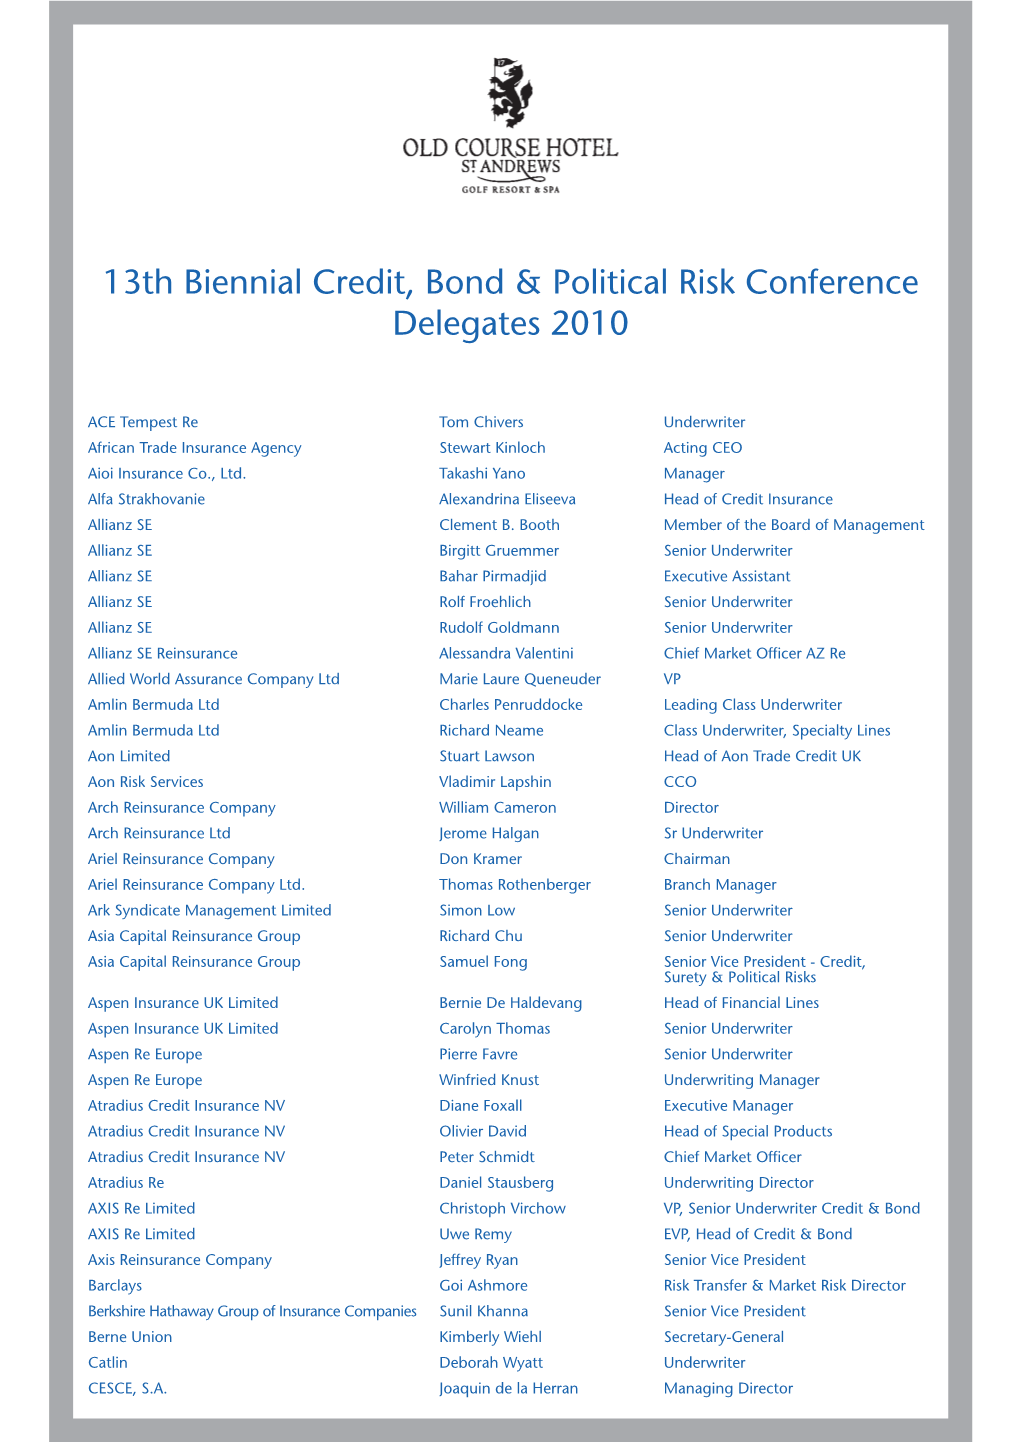 13Th Biennial Credit, Bond & Political Risk Conference Delegates 2010